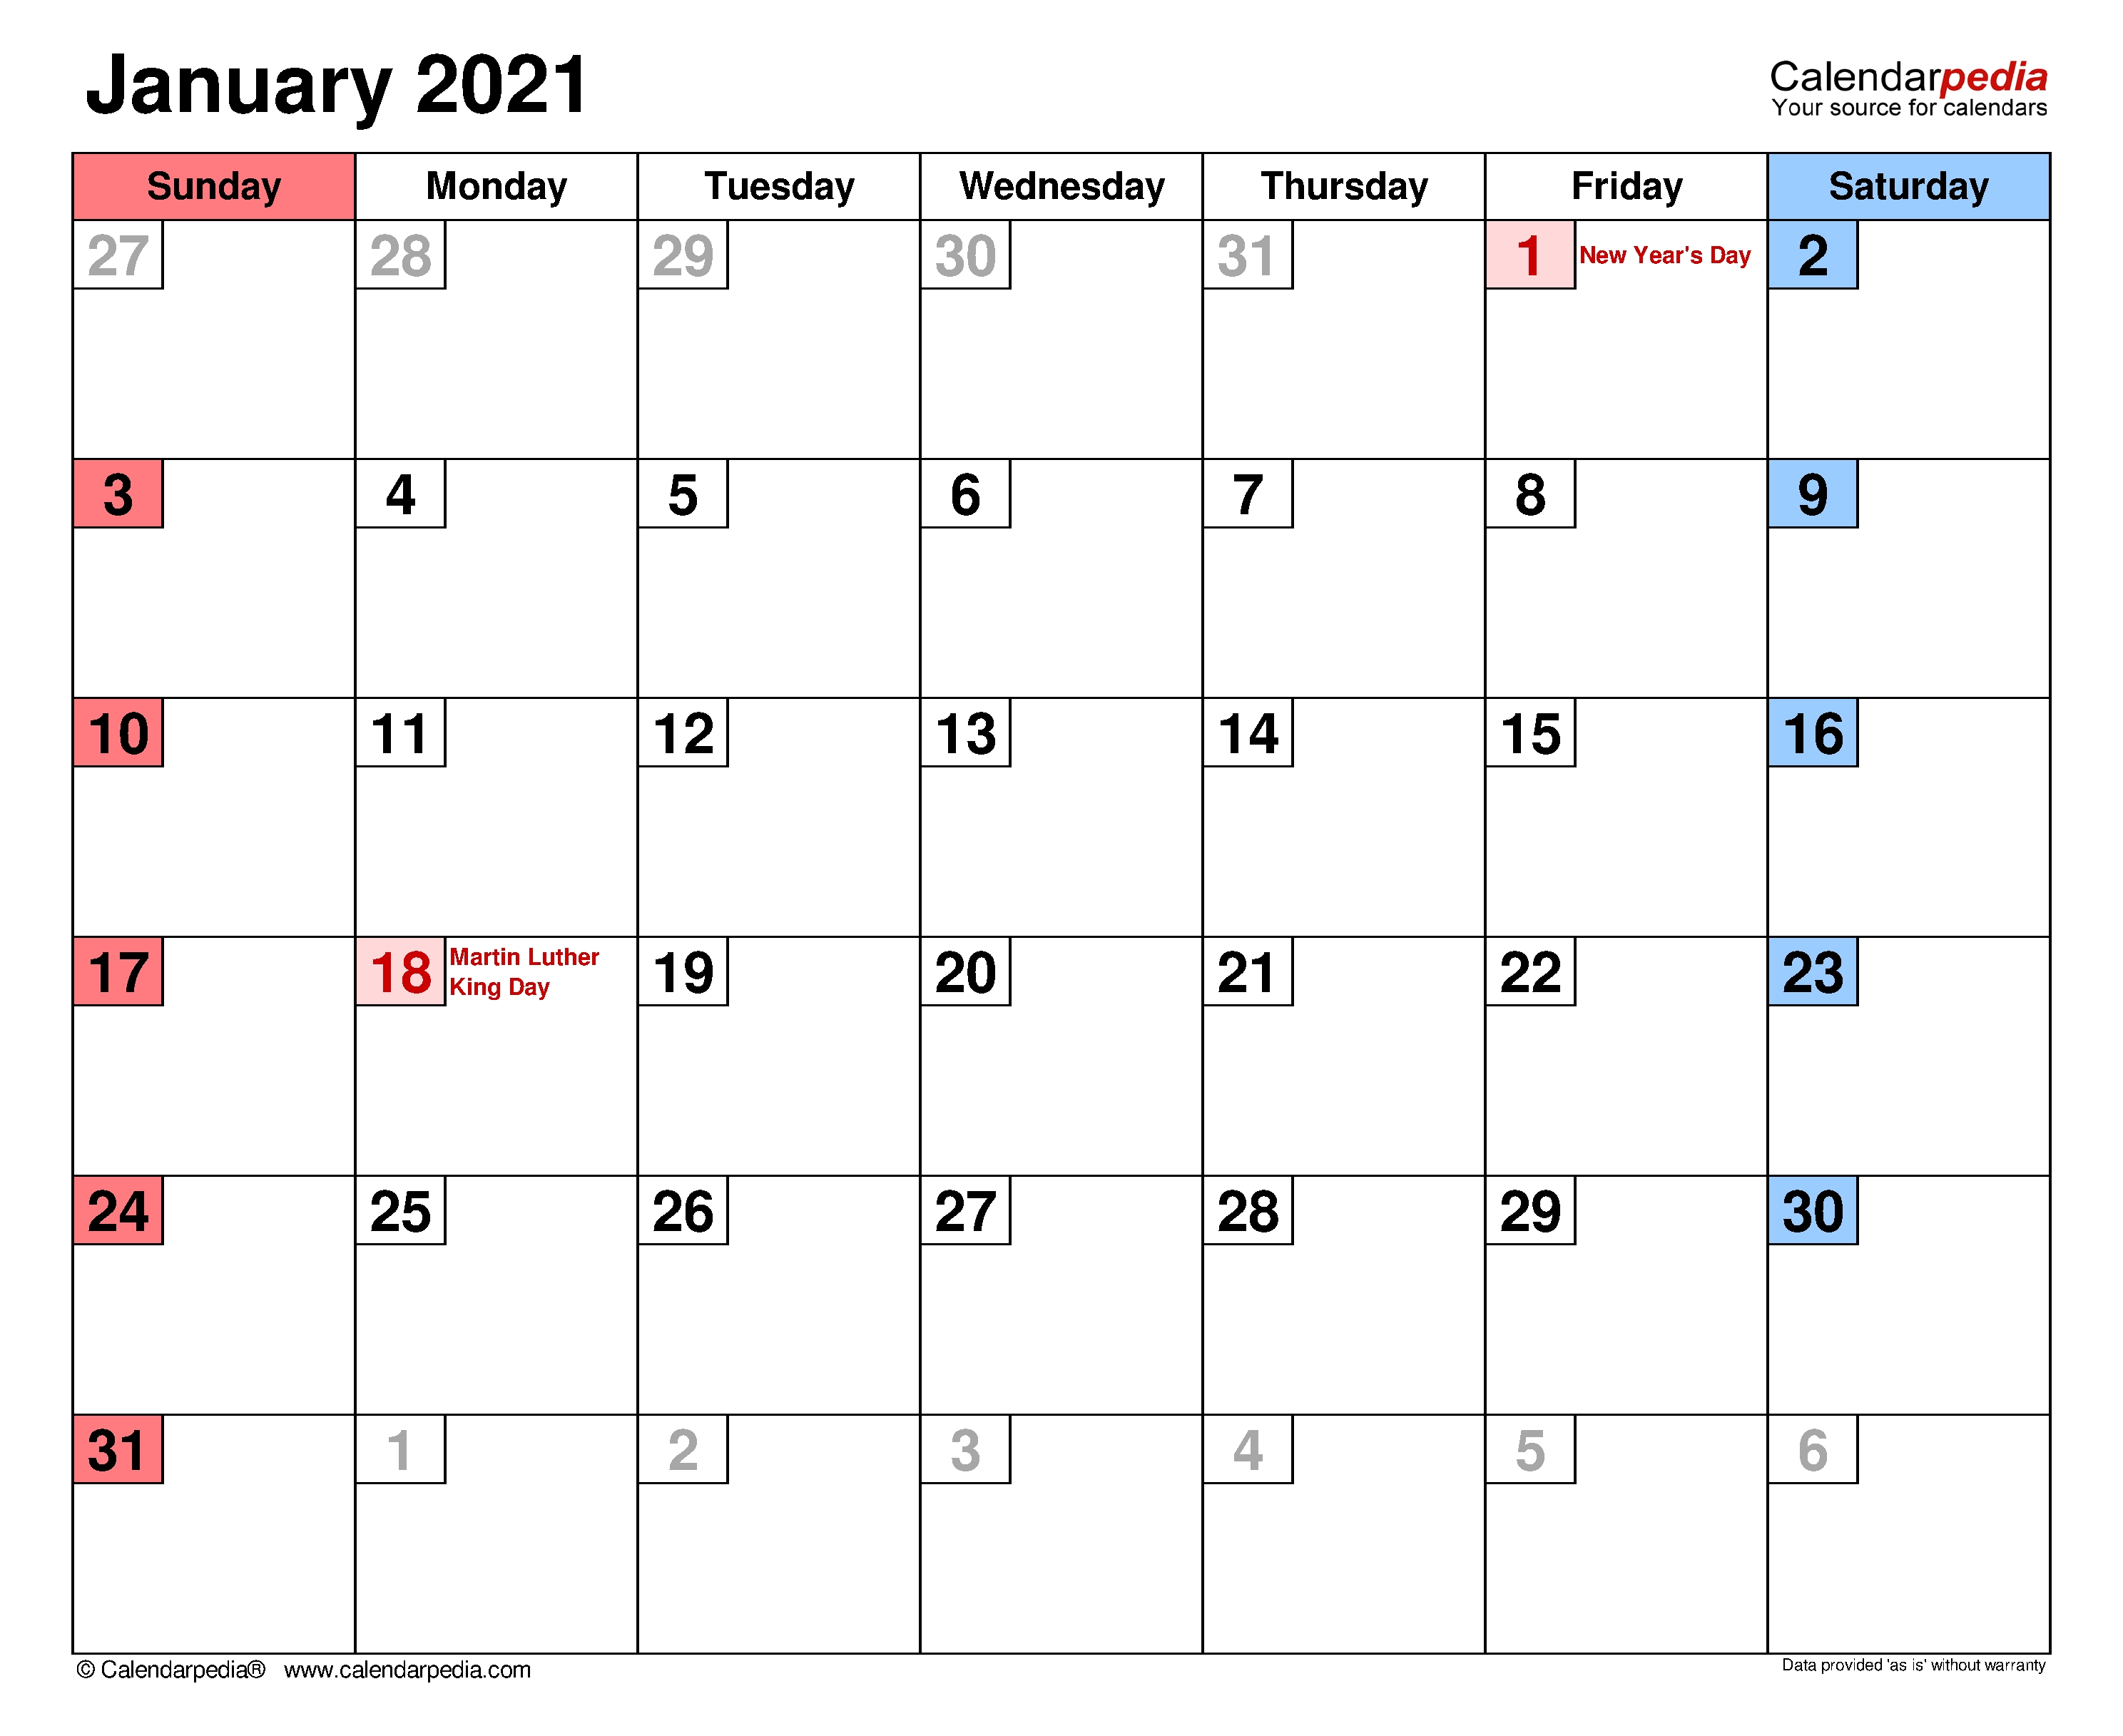 January 2021 Calendar | Templates For Word, Excel And Pdf 2021 Word Calendar Wincalendar